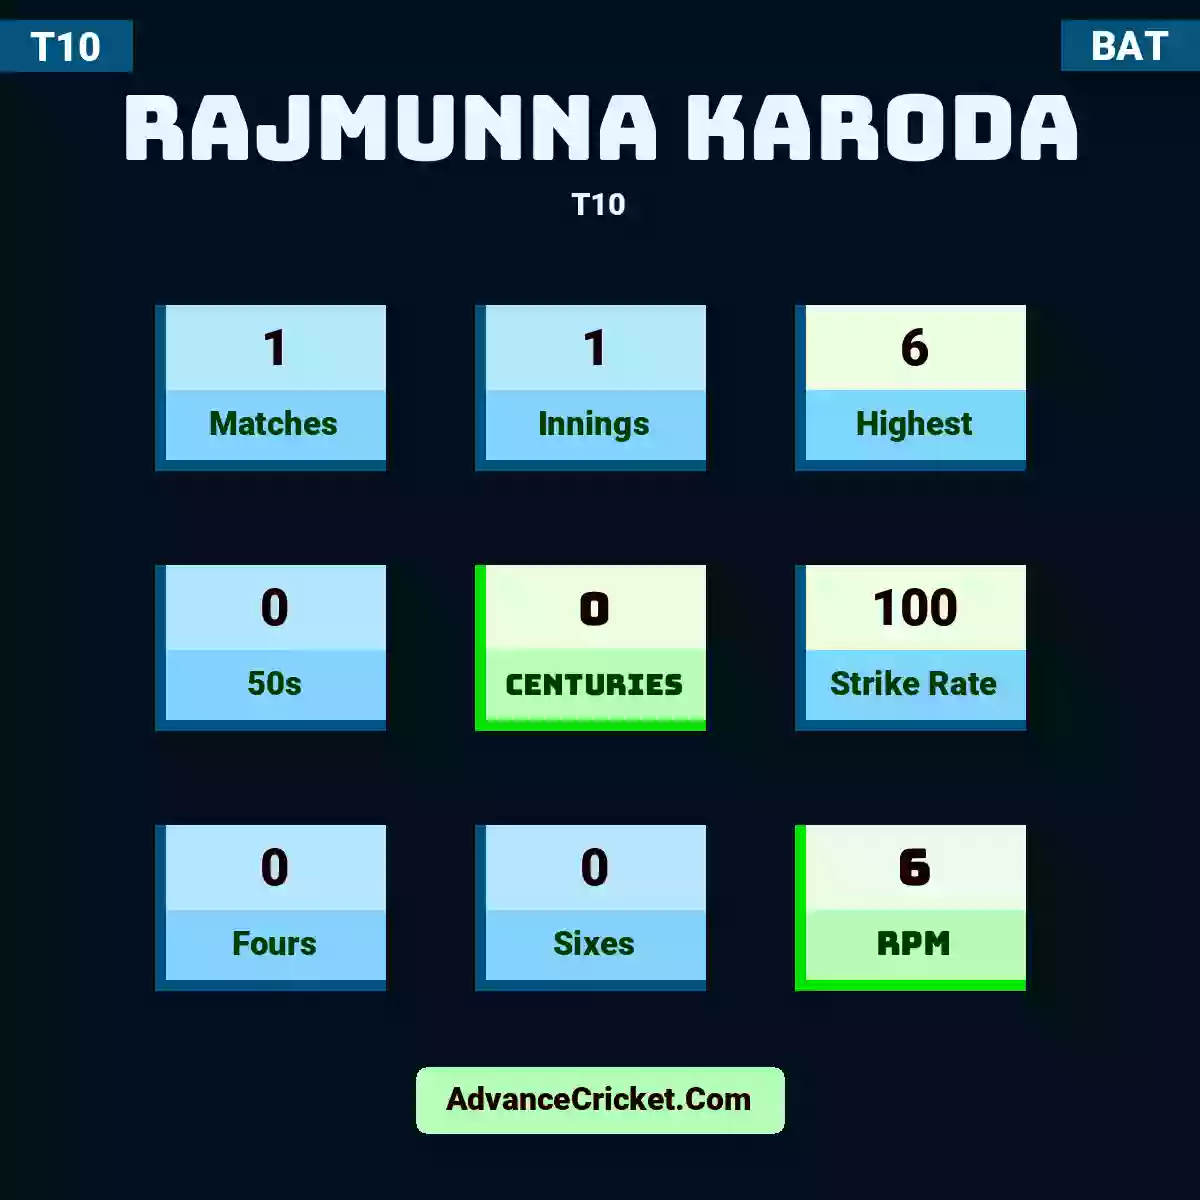 Rajmunna Karoda T10 , Rajmunna Karoda played 1 matches, scored 6 runs as highest, 0 half-centuries, and 0 centuries, with a strike rate of 100. R.Karoda hit 0 fours and 0 sixes, with an RPM of 6.